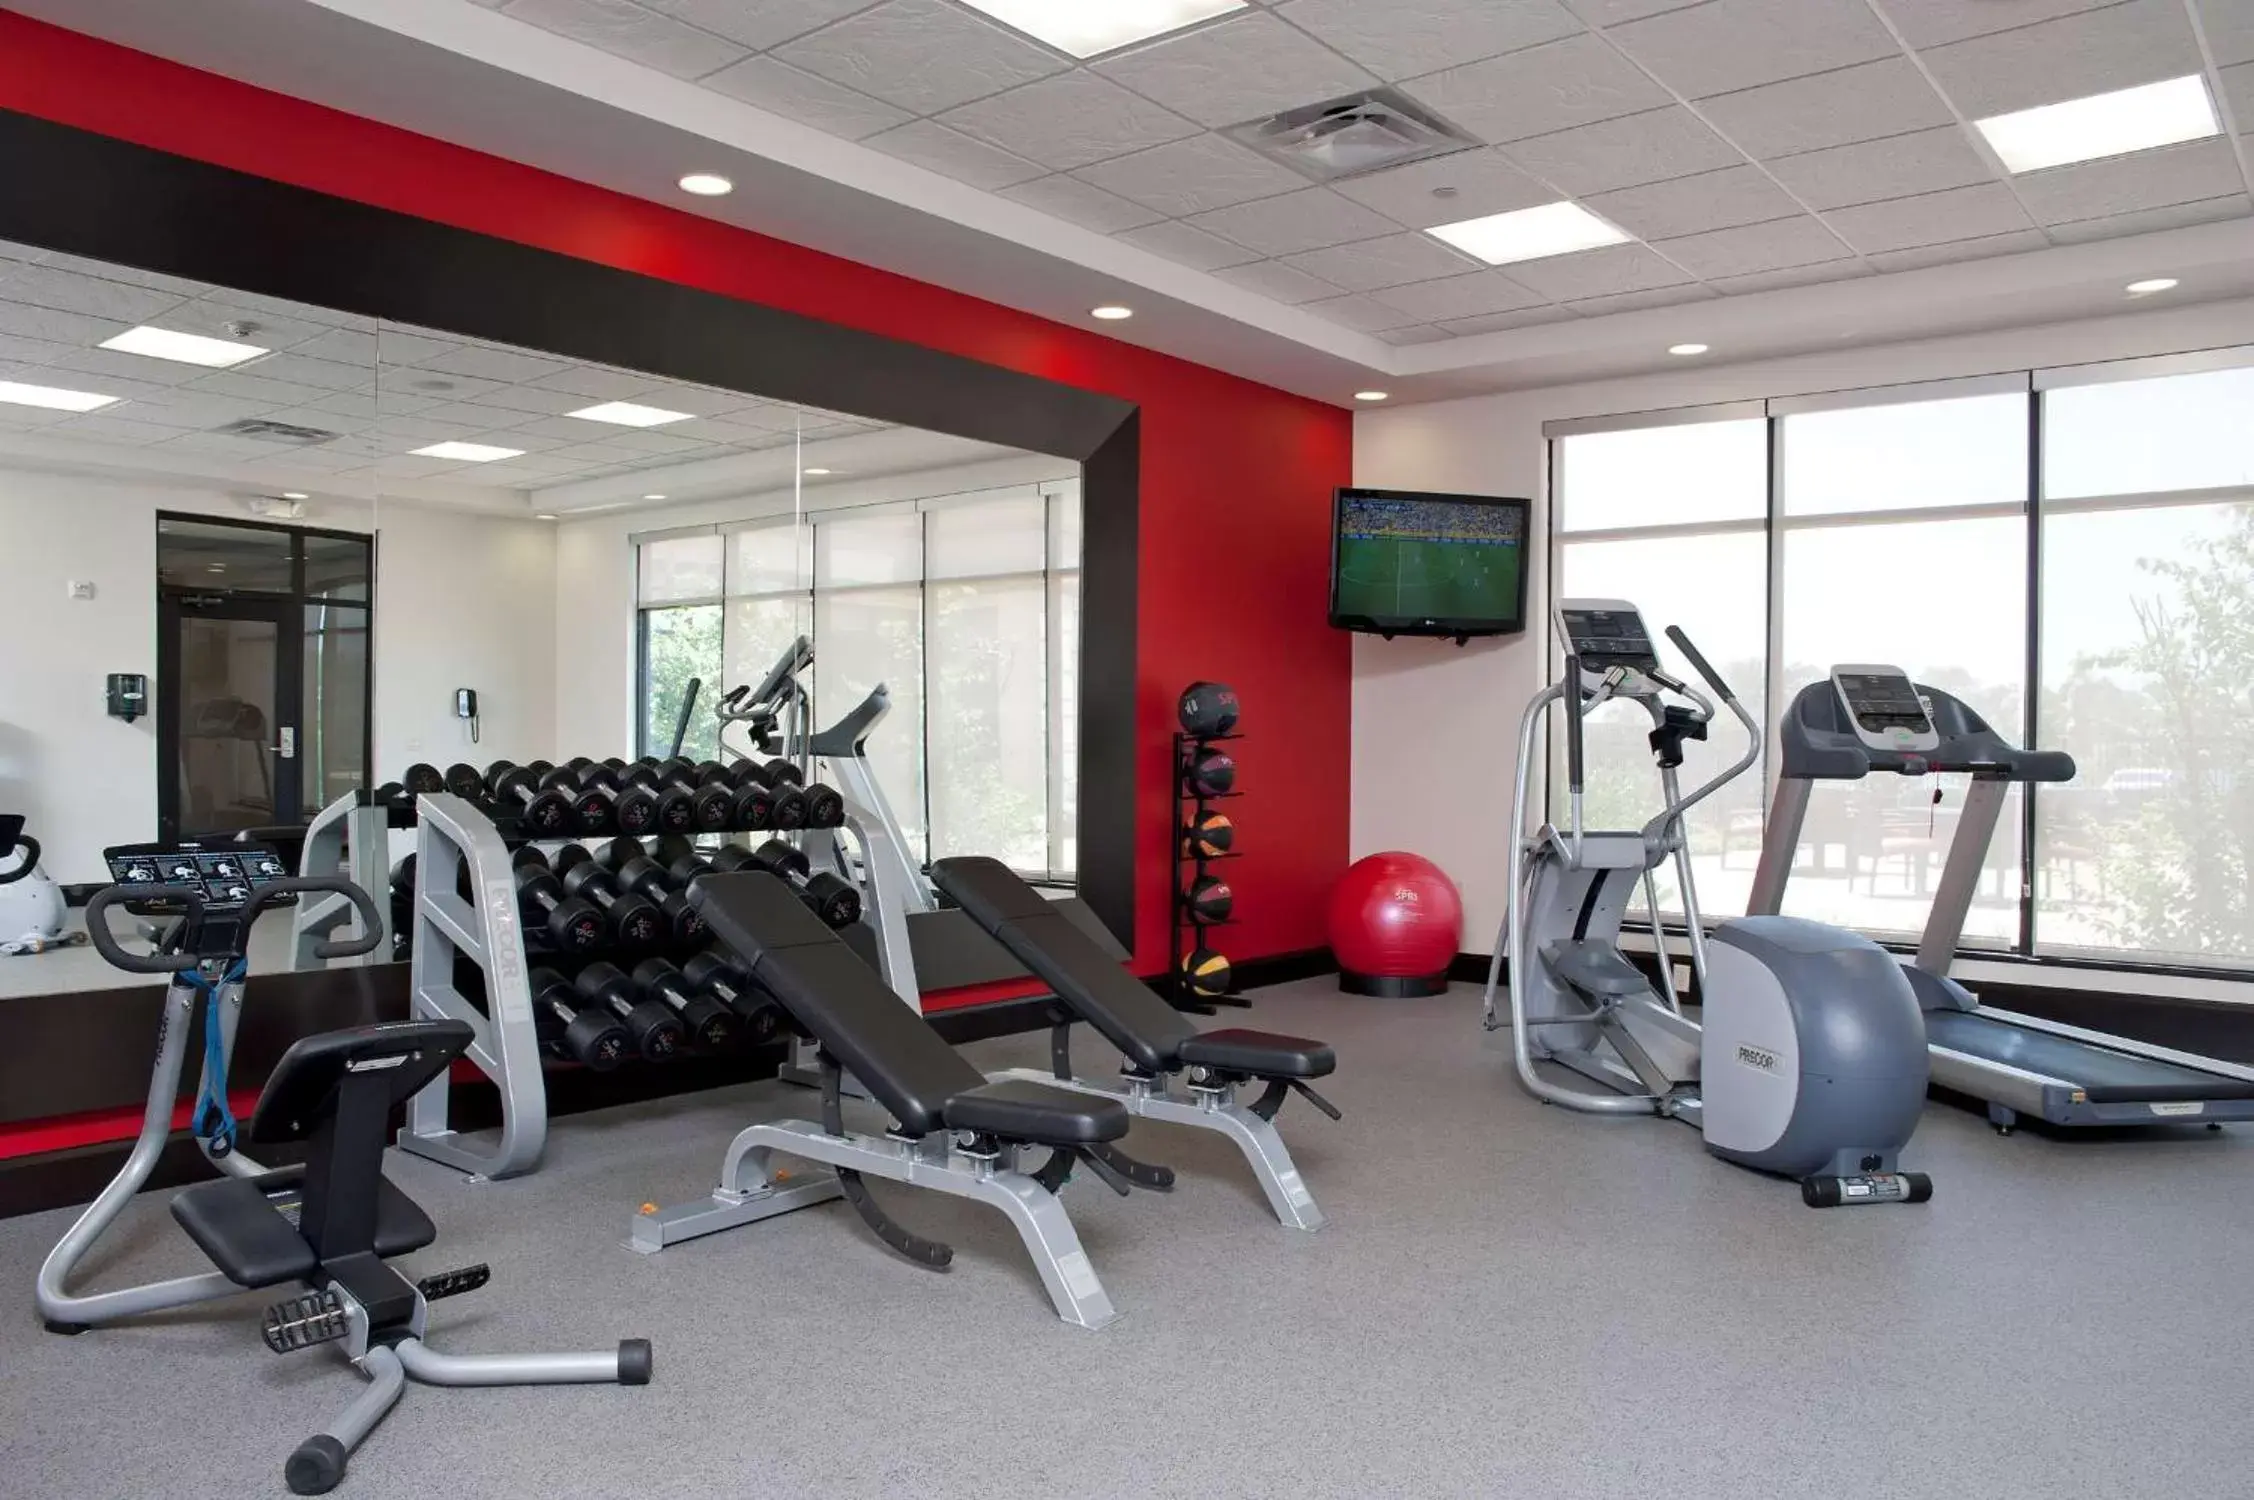 Fitness centre/facilities, Fitness Center/Facilities in Hilton Garden Inn Ft Worth Alliance Airport